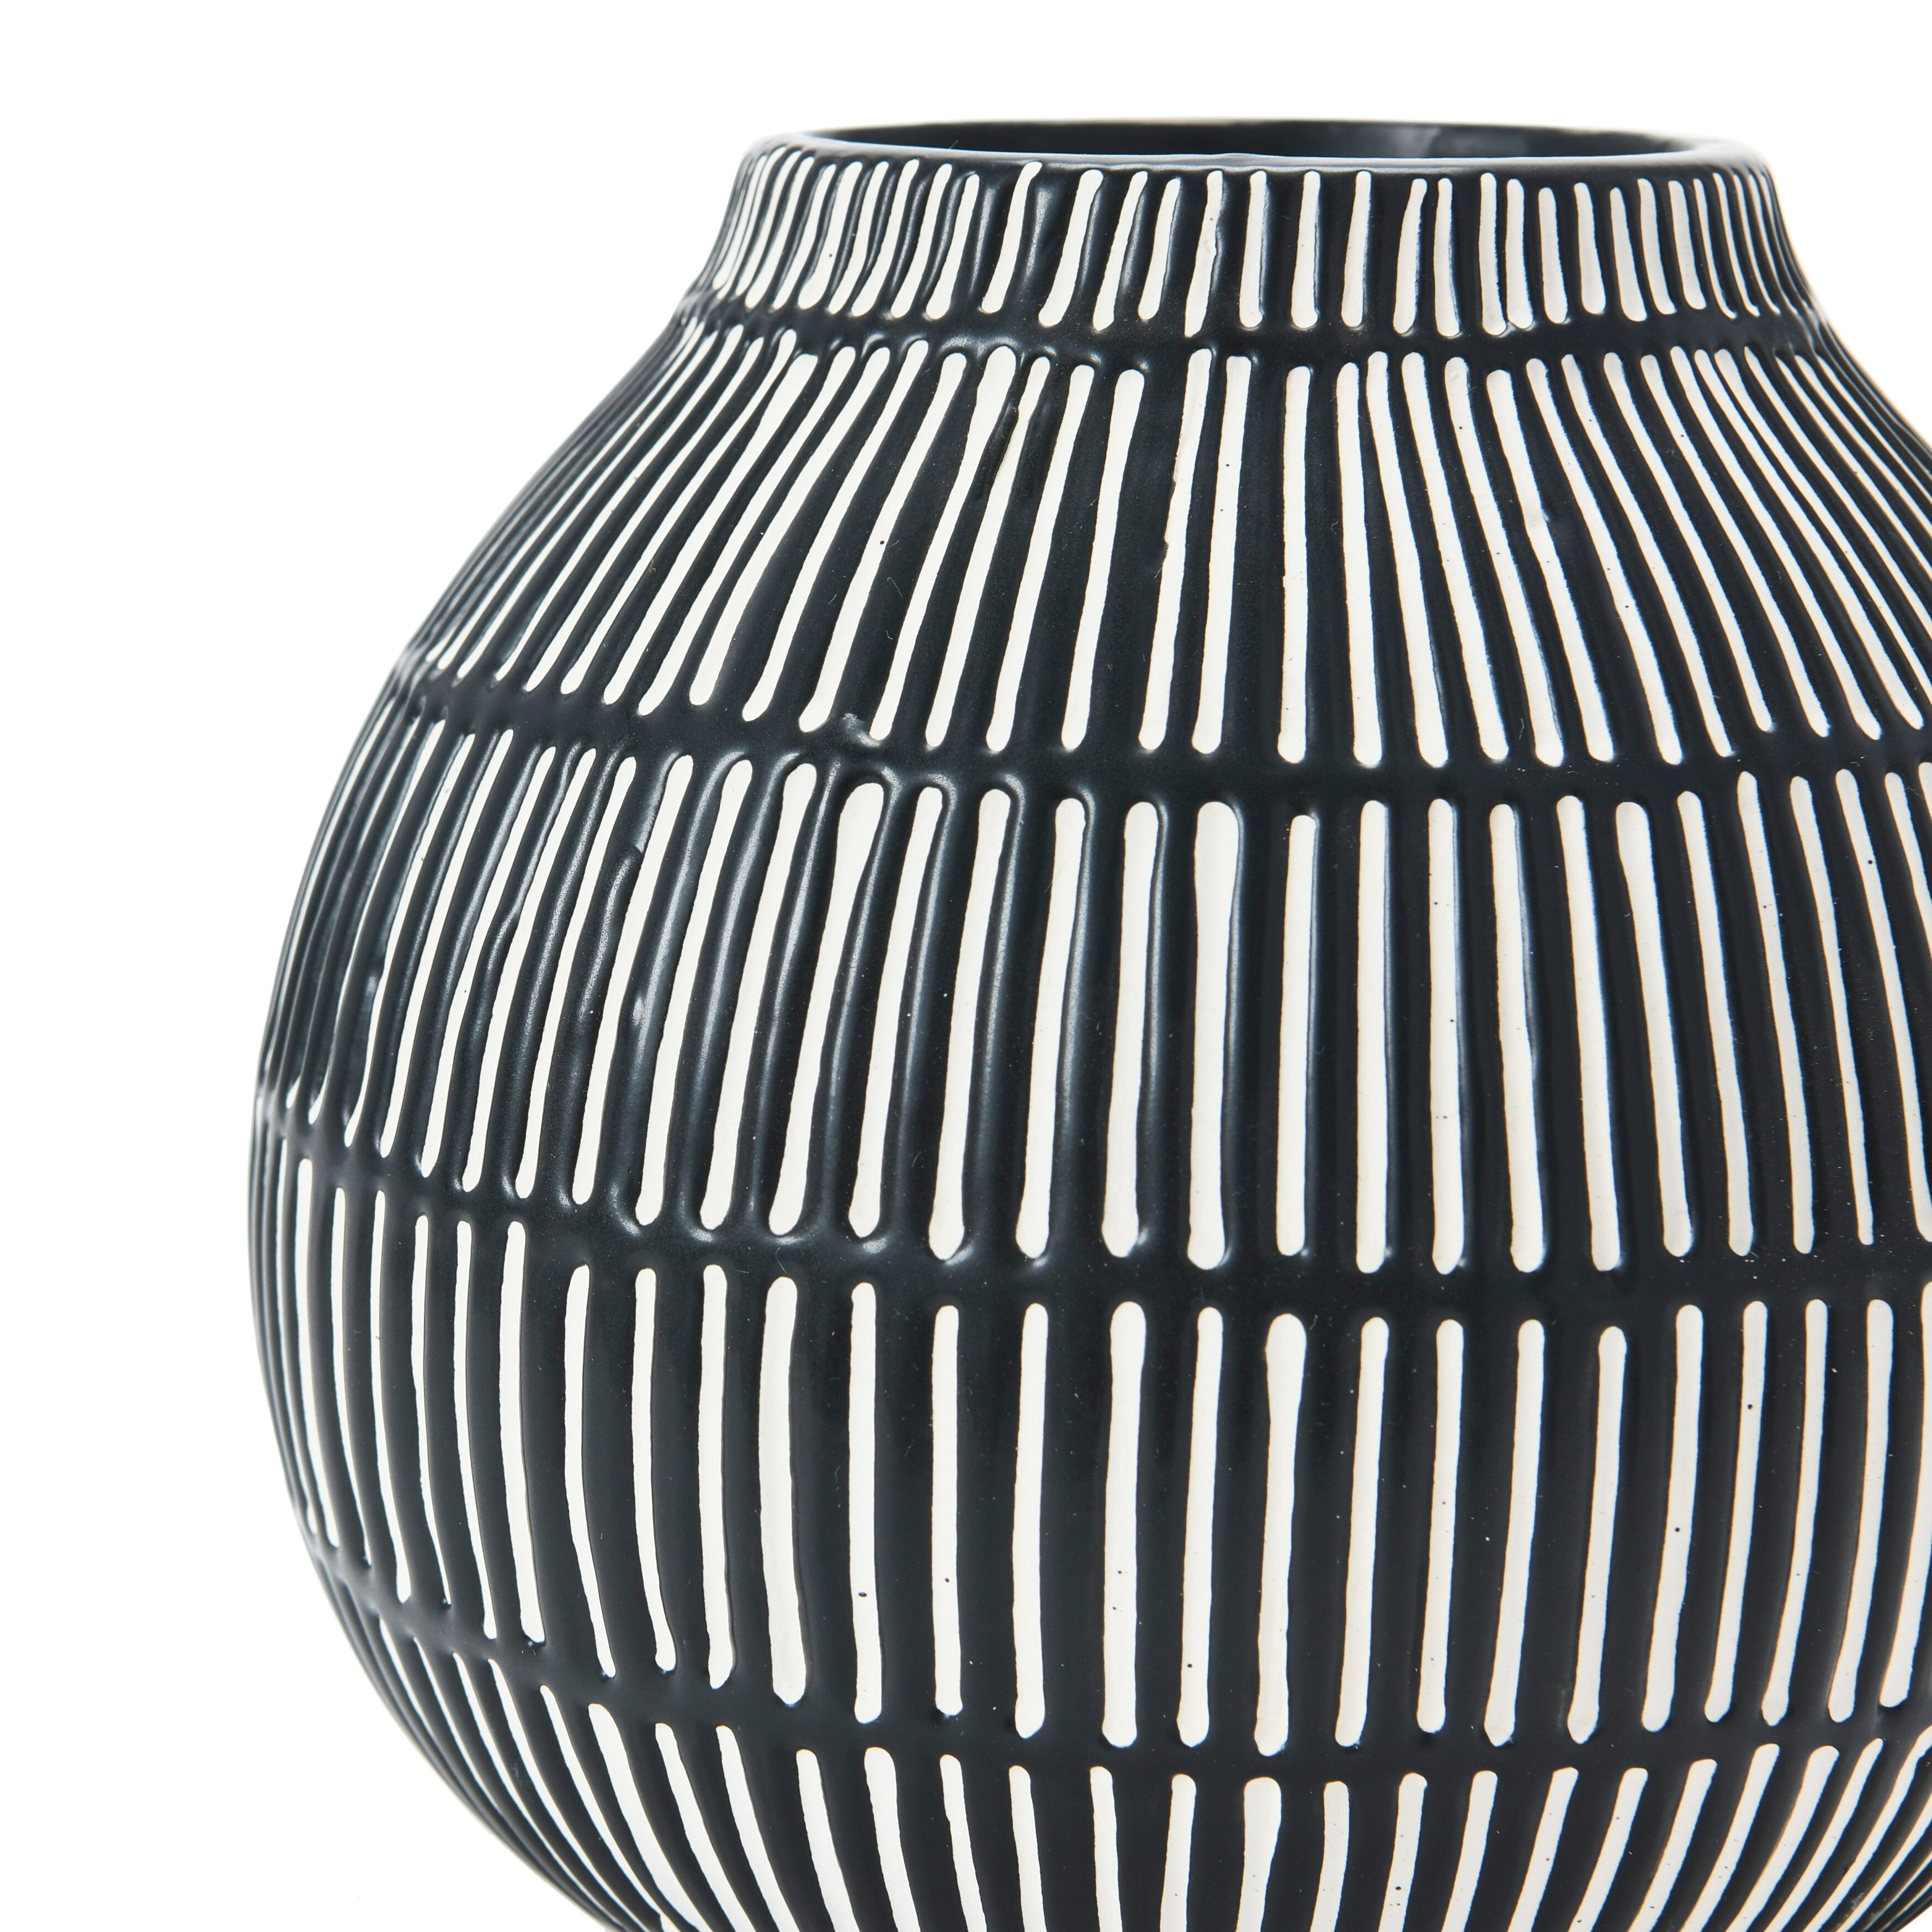 Debossed Stoneware Vase, Black & White